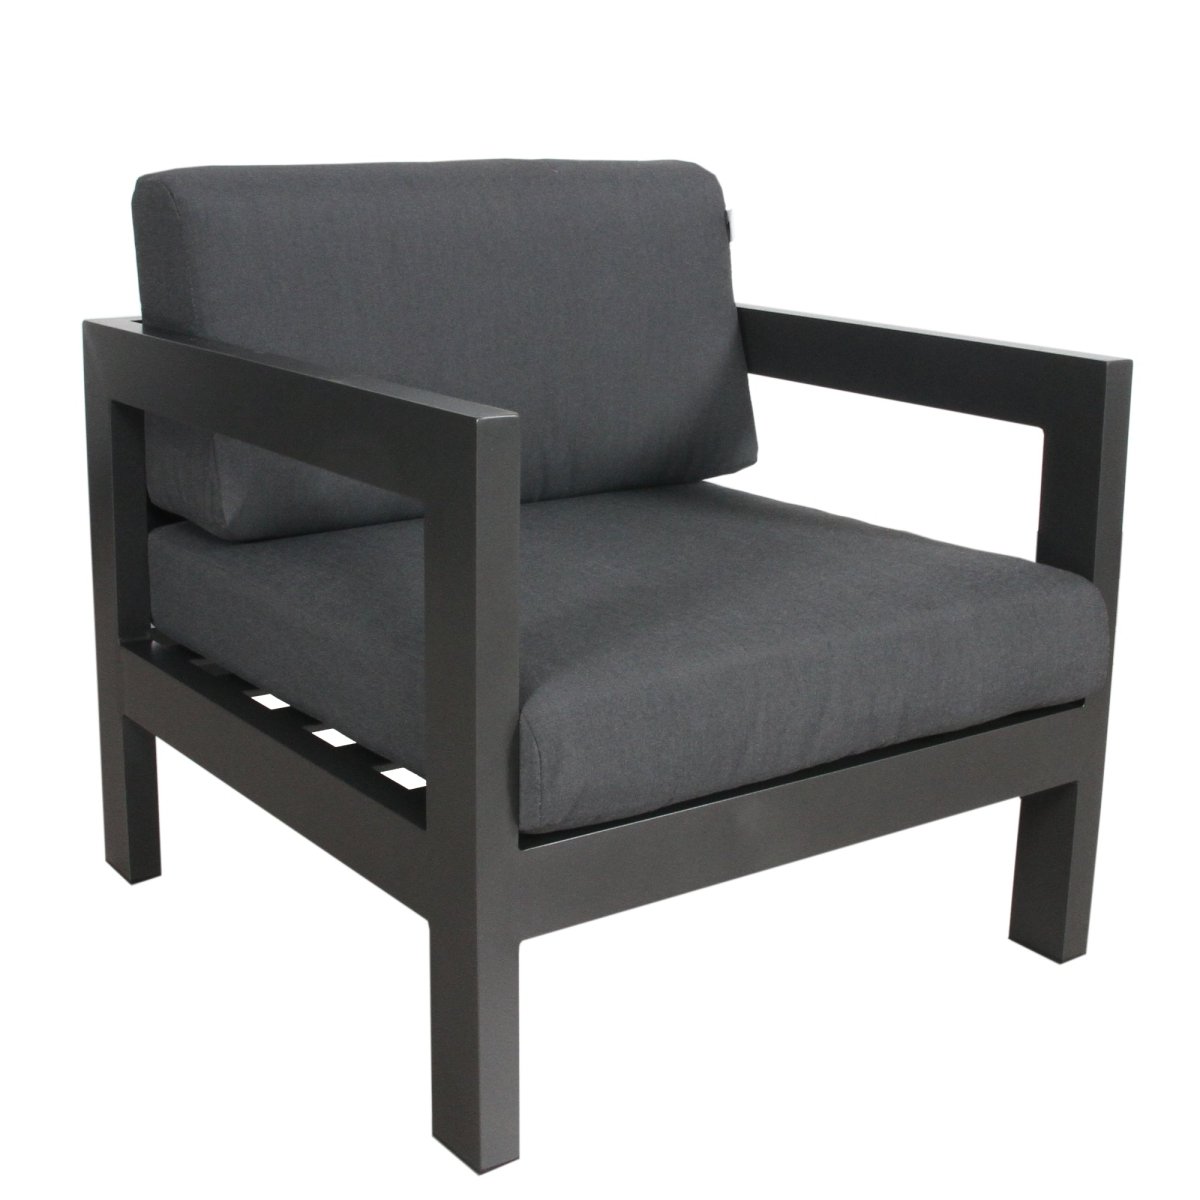 Outie 3pc Set 1+1+3 Seater Outdoor Sofa Lounge Aluminium Frame Charcoal - Outdoorium